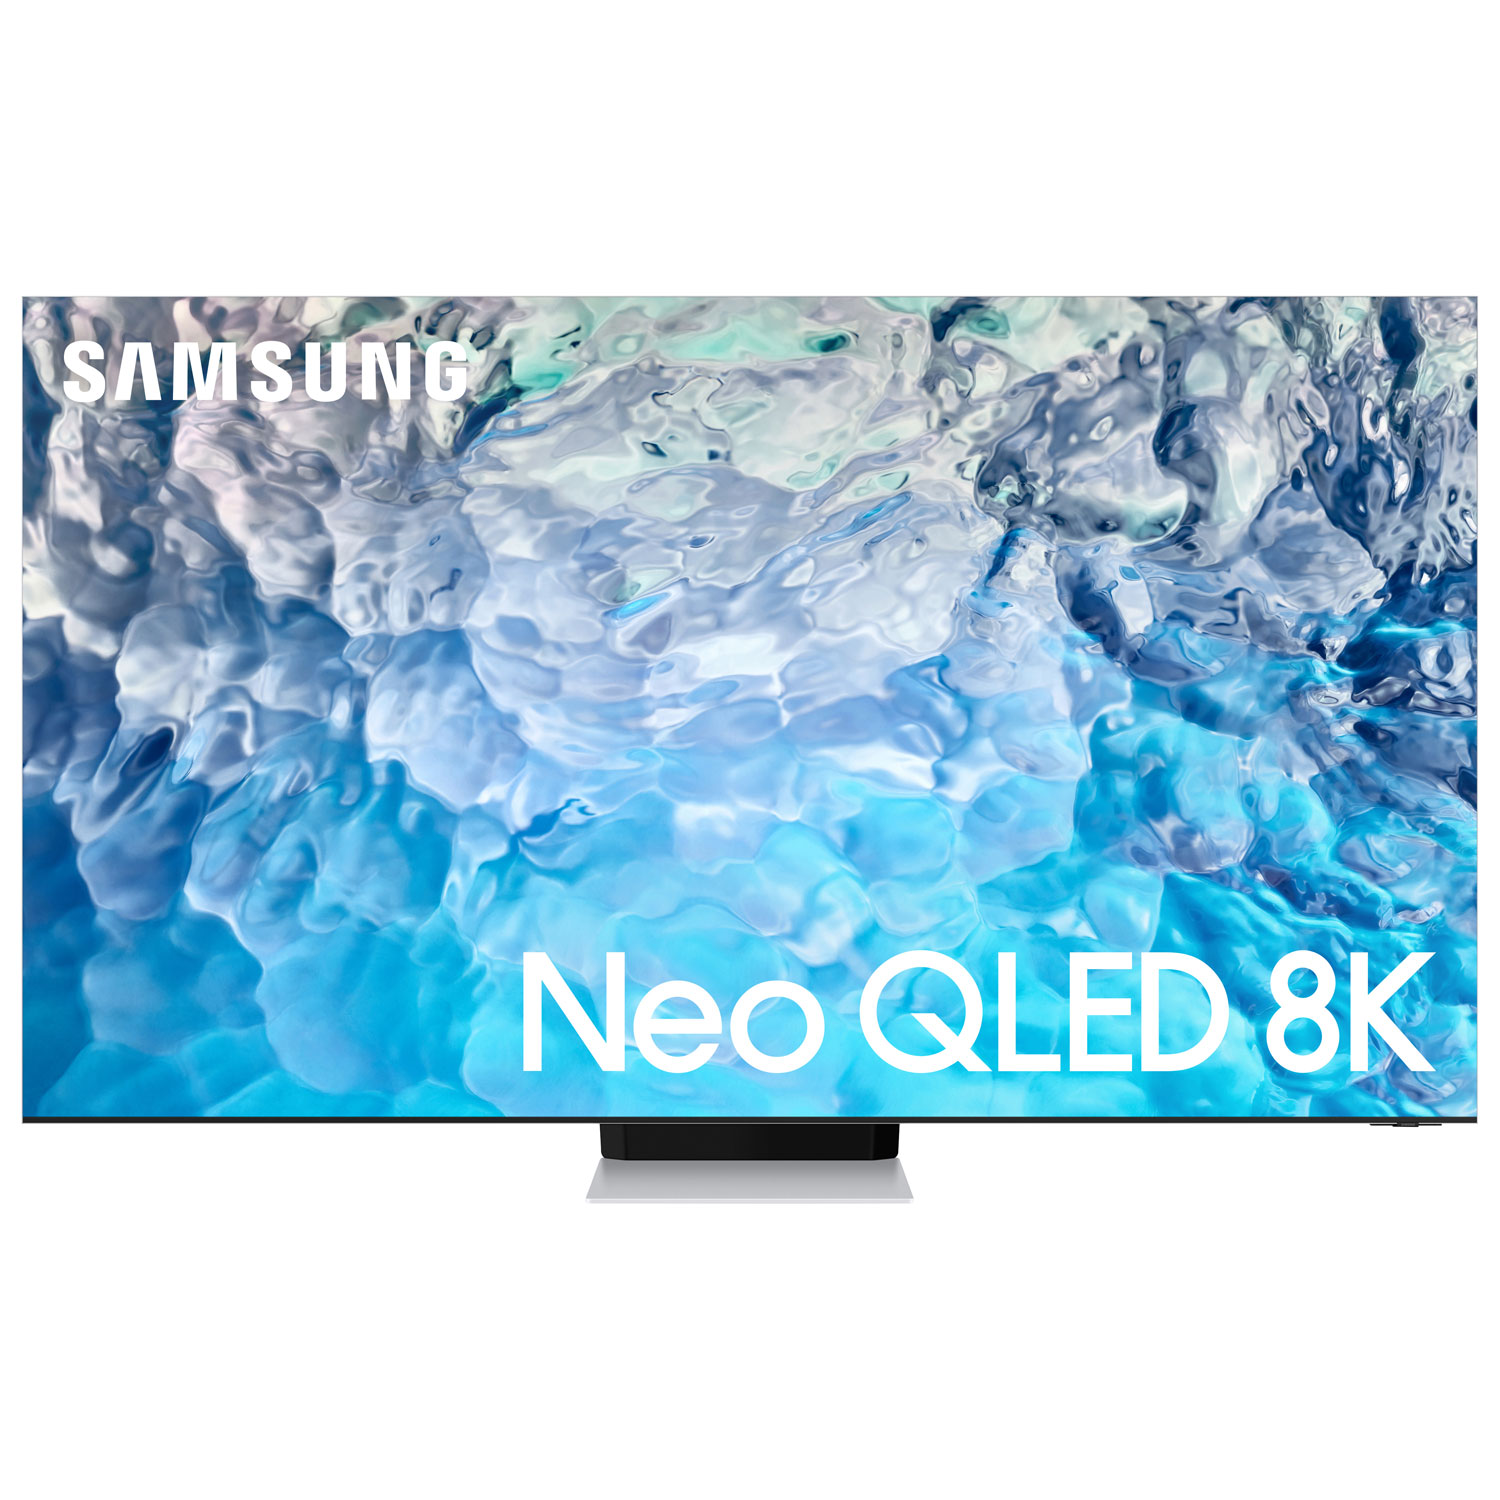 Samsung 85" 8K UHD QLED Tizen Smart TV (QN85QN900BFXZC) - Stainless Steel